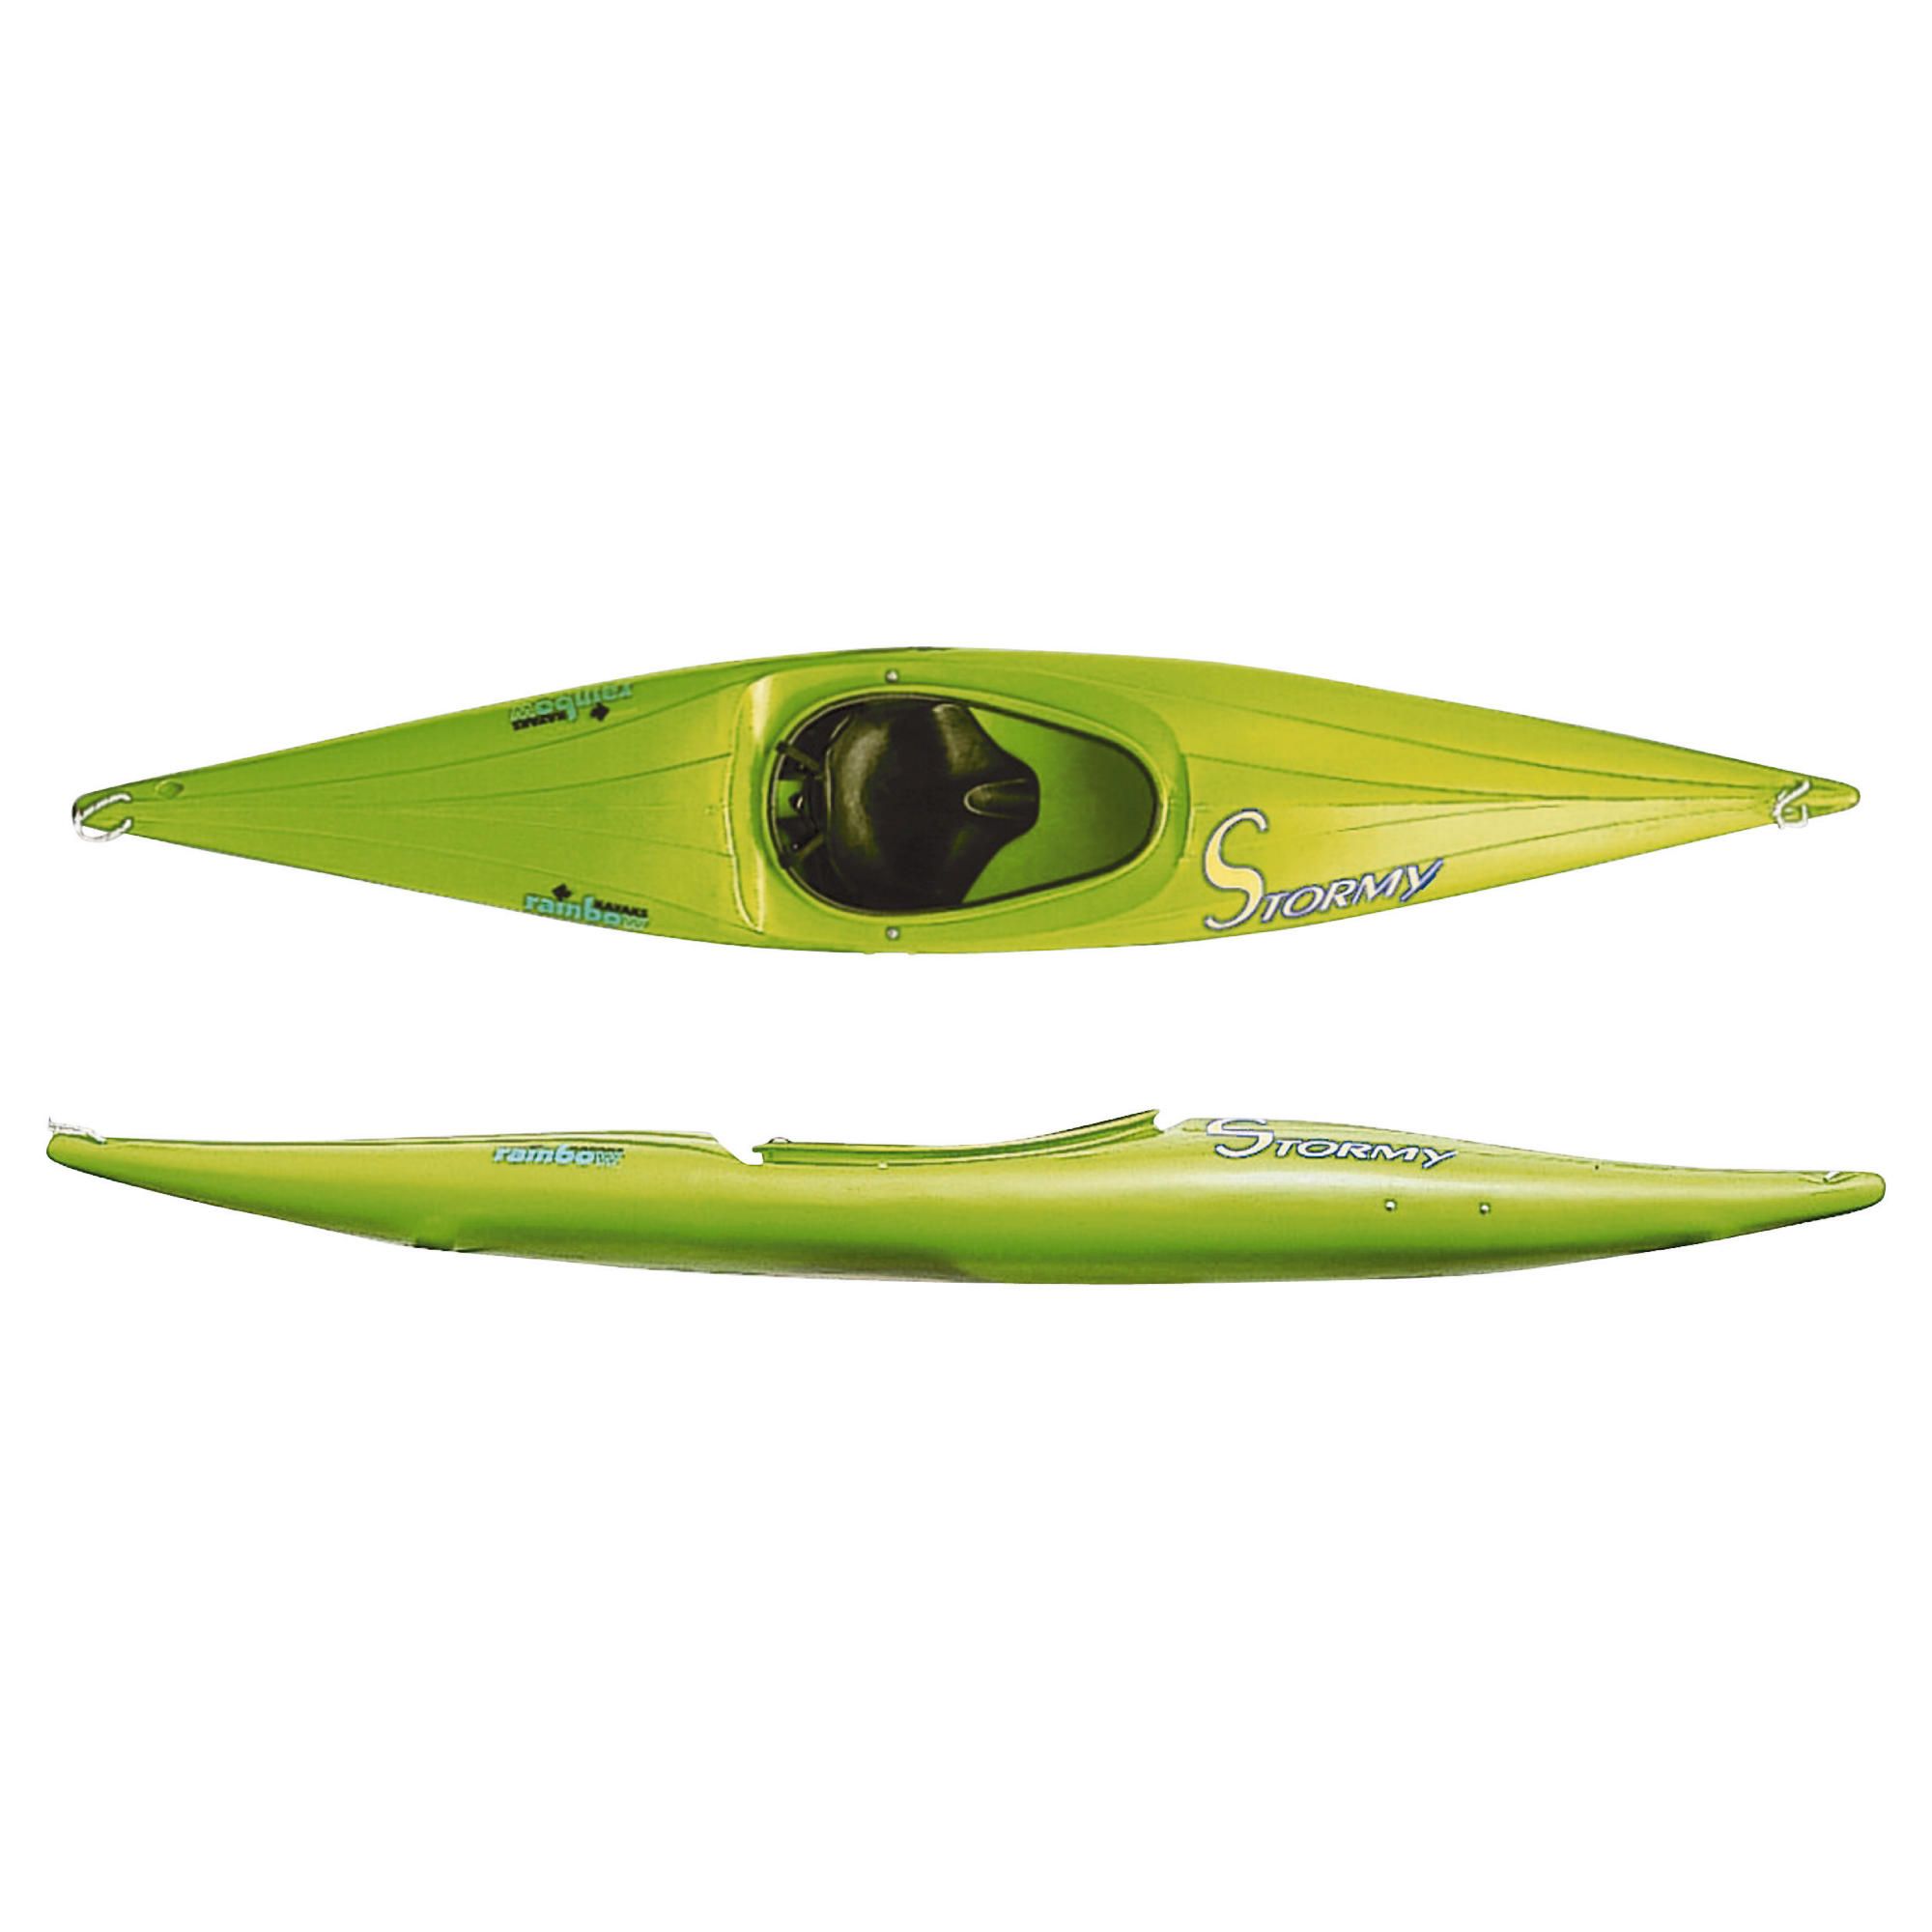 Storm Touring Kayak - Yellow/Green at Tesco Direct